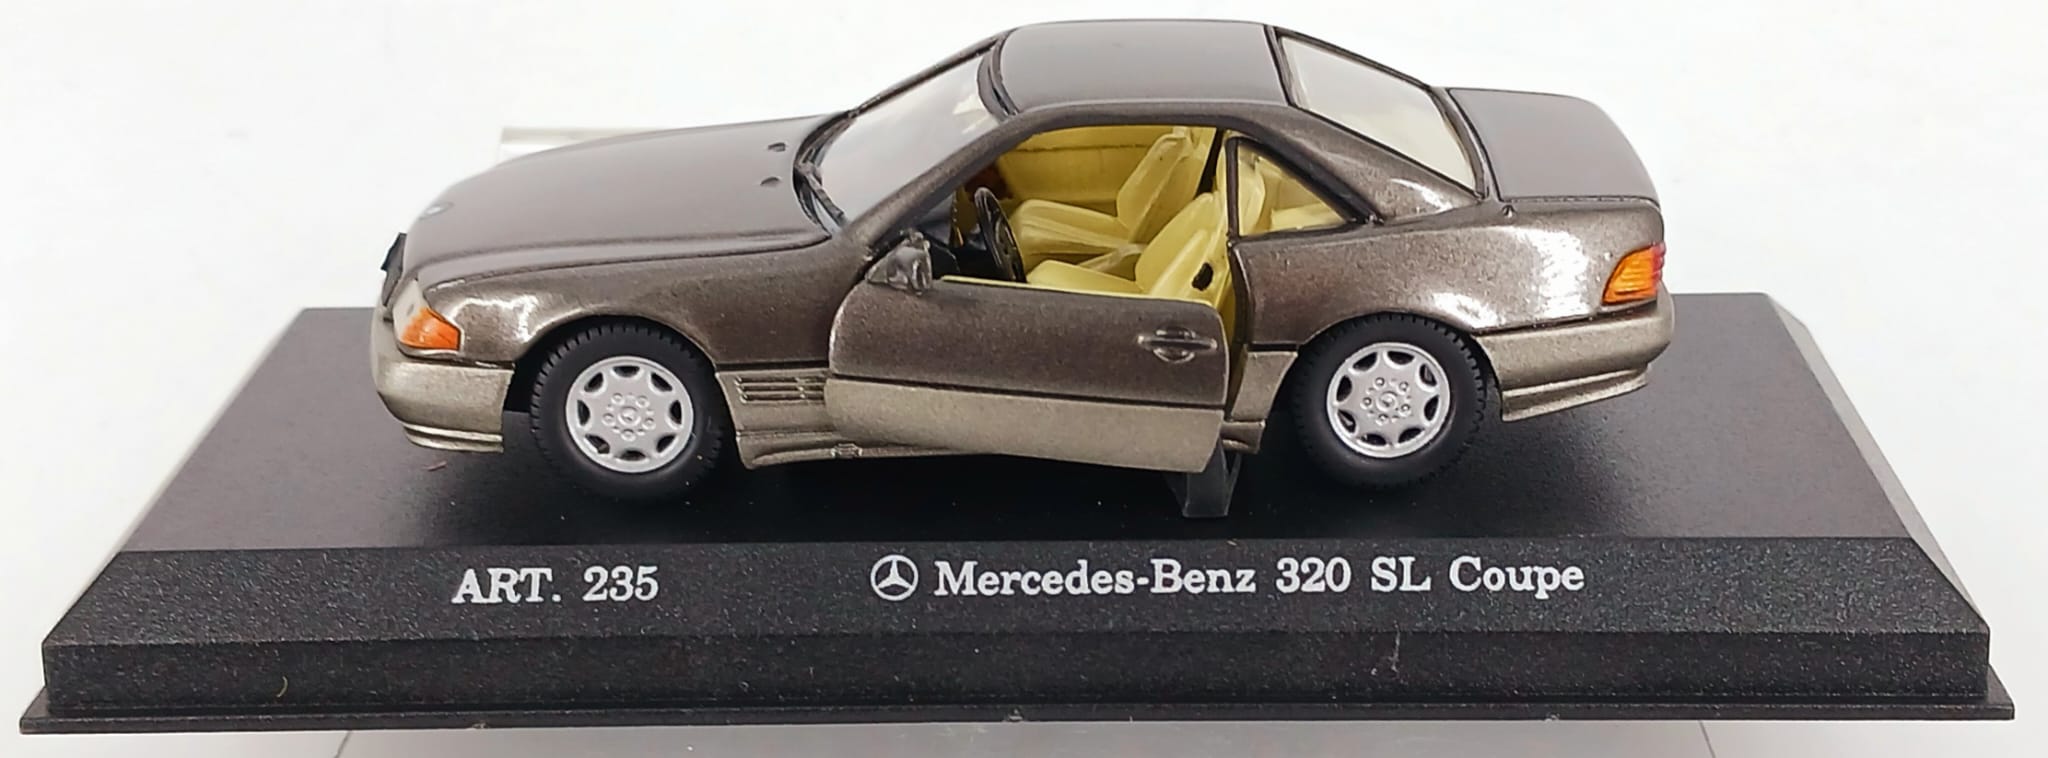 Mercedes-Benz 320 SL Coupe 1/43